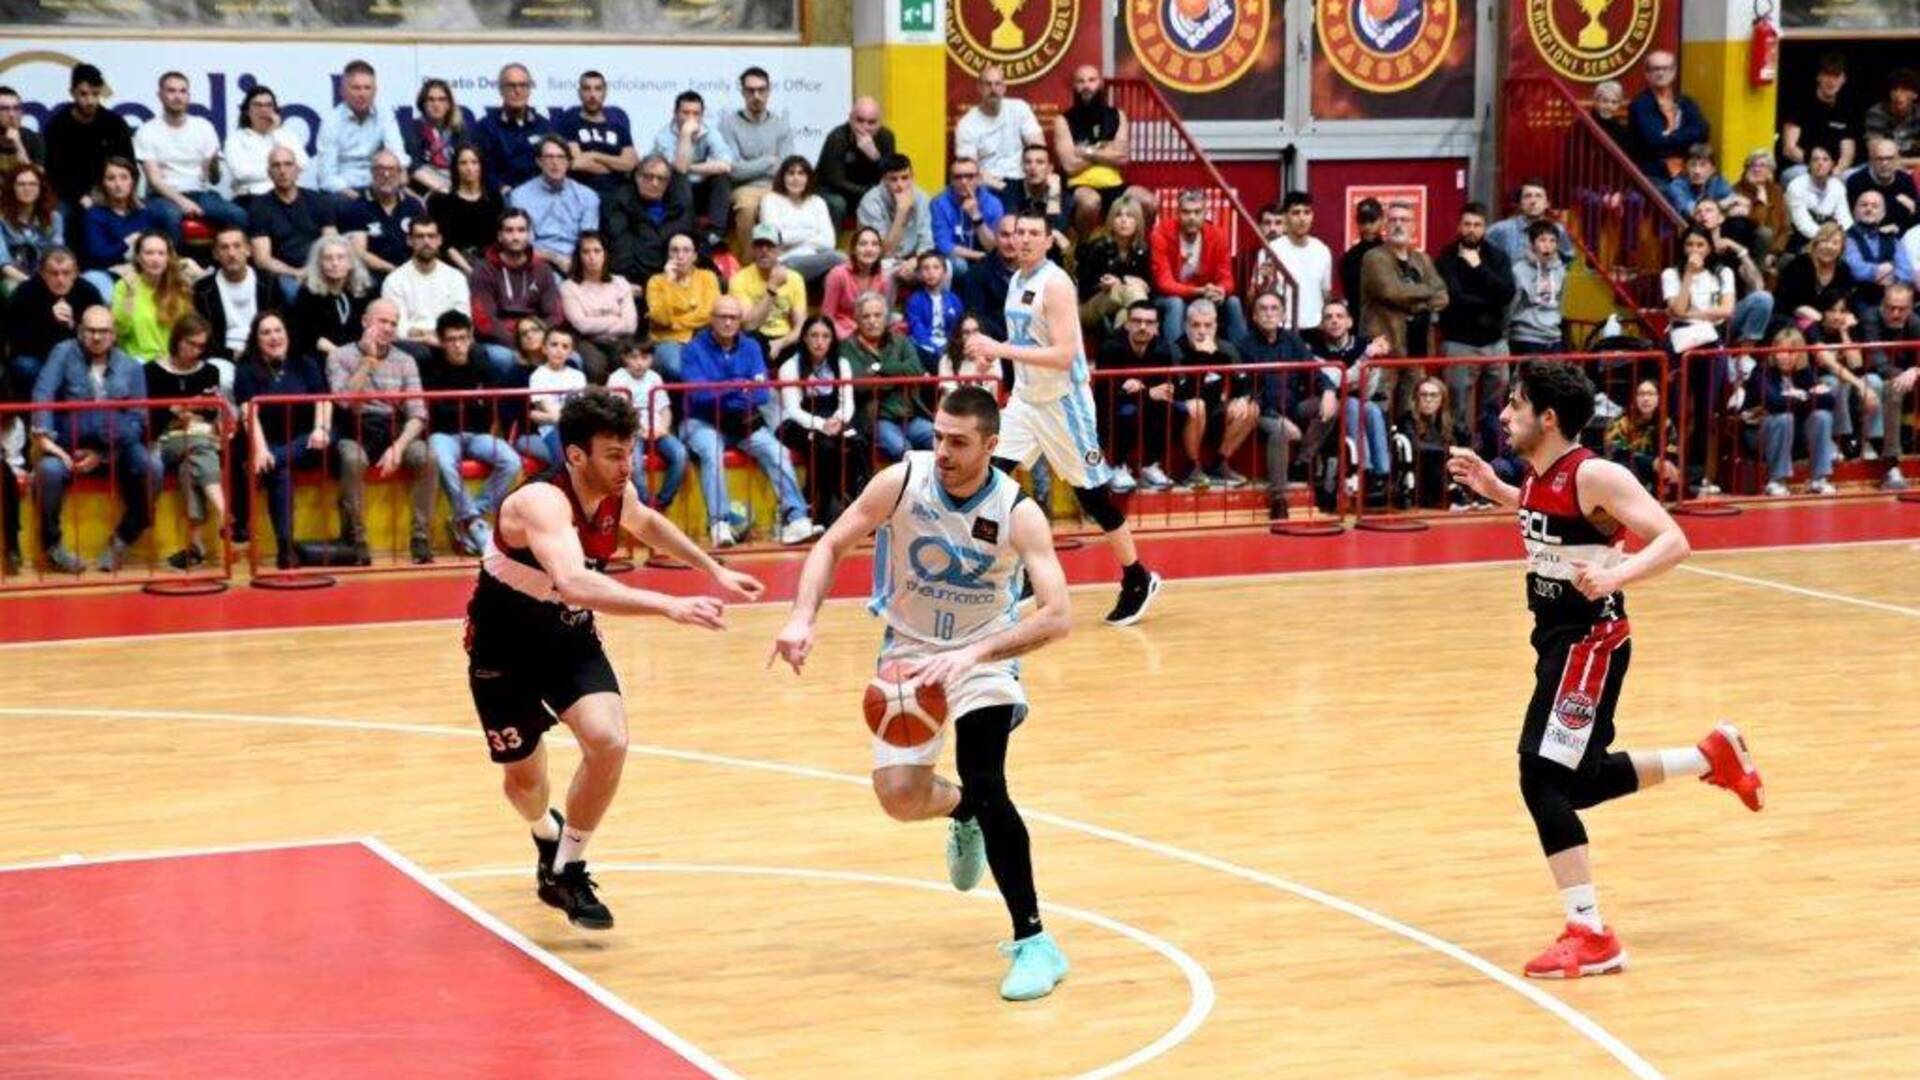 Basket, Serie B playoff : l’Az Robur Saronno stende Lucca e vola in semifinale di playoff